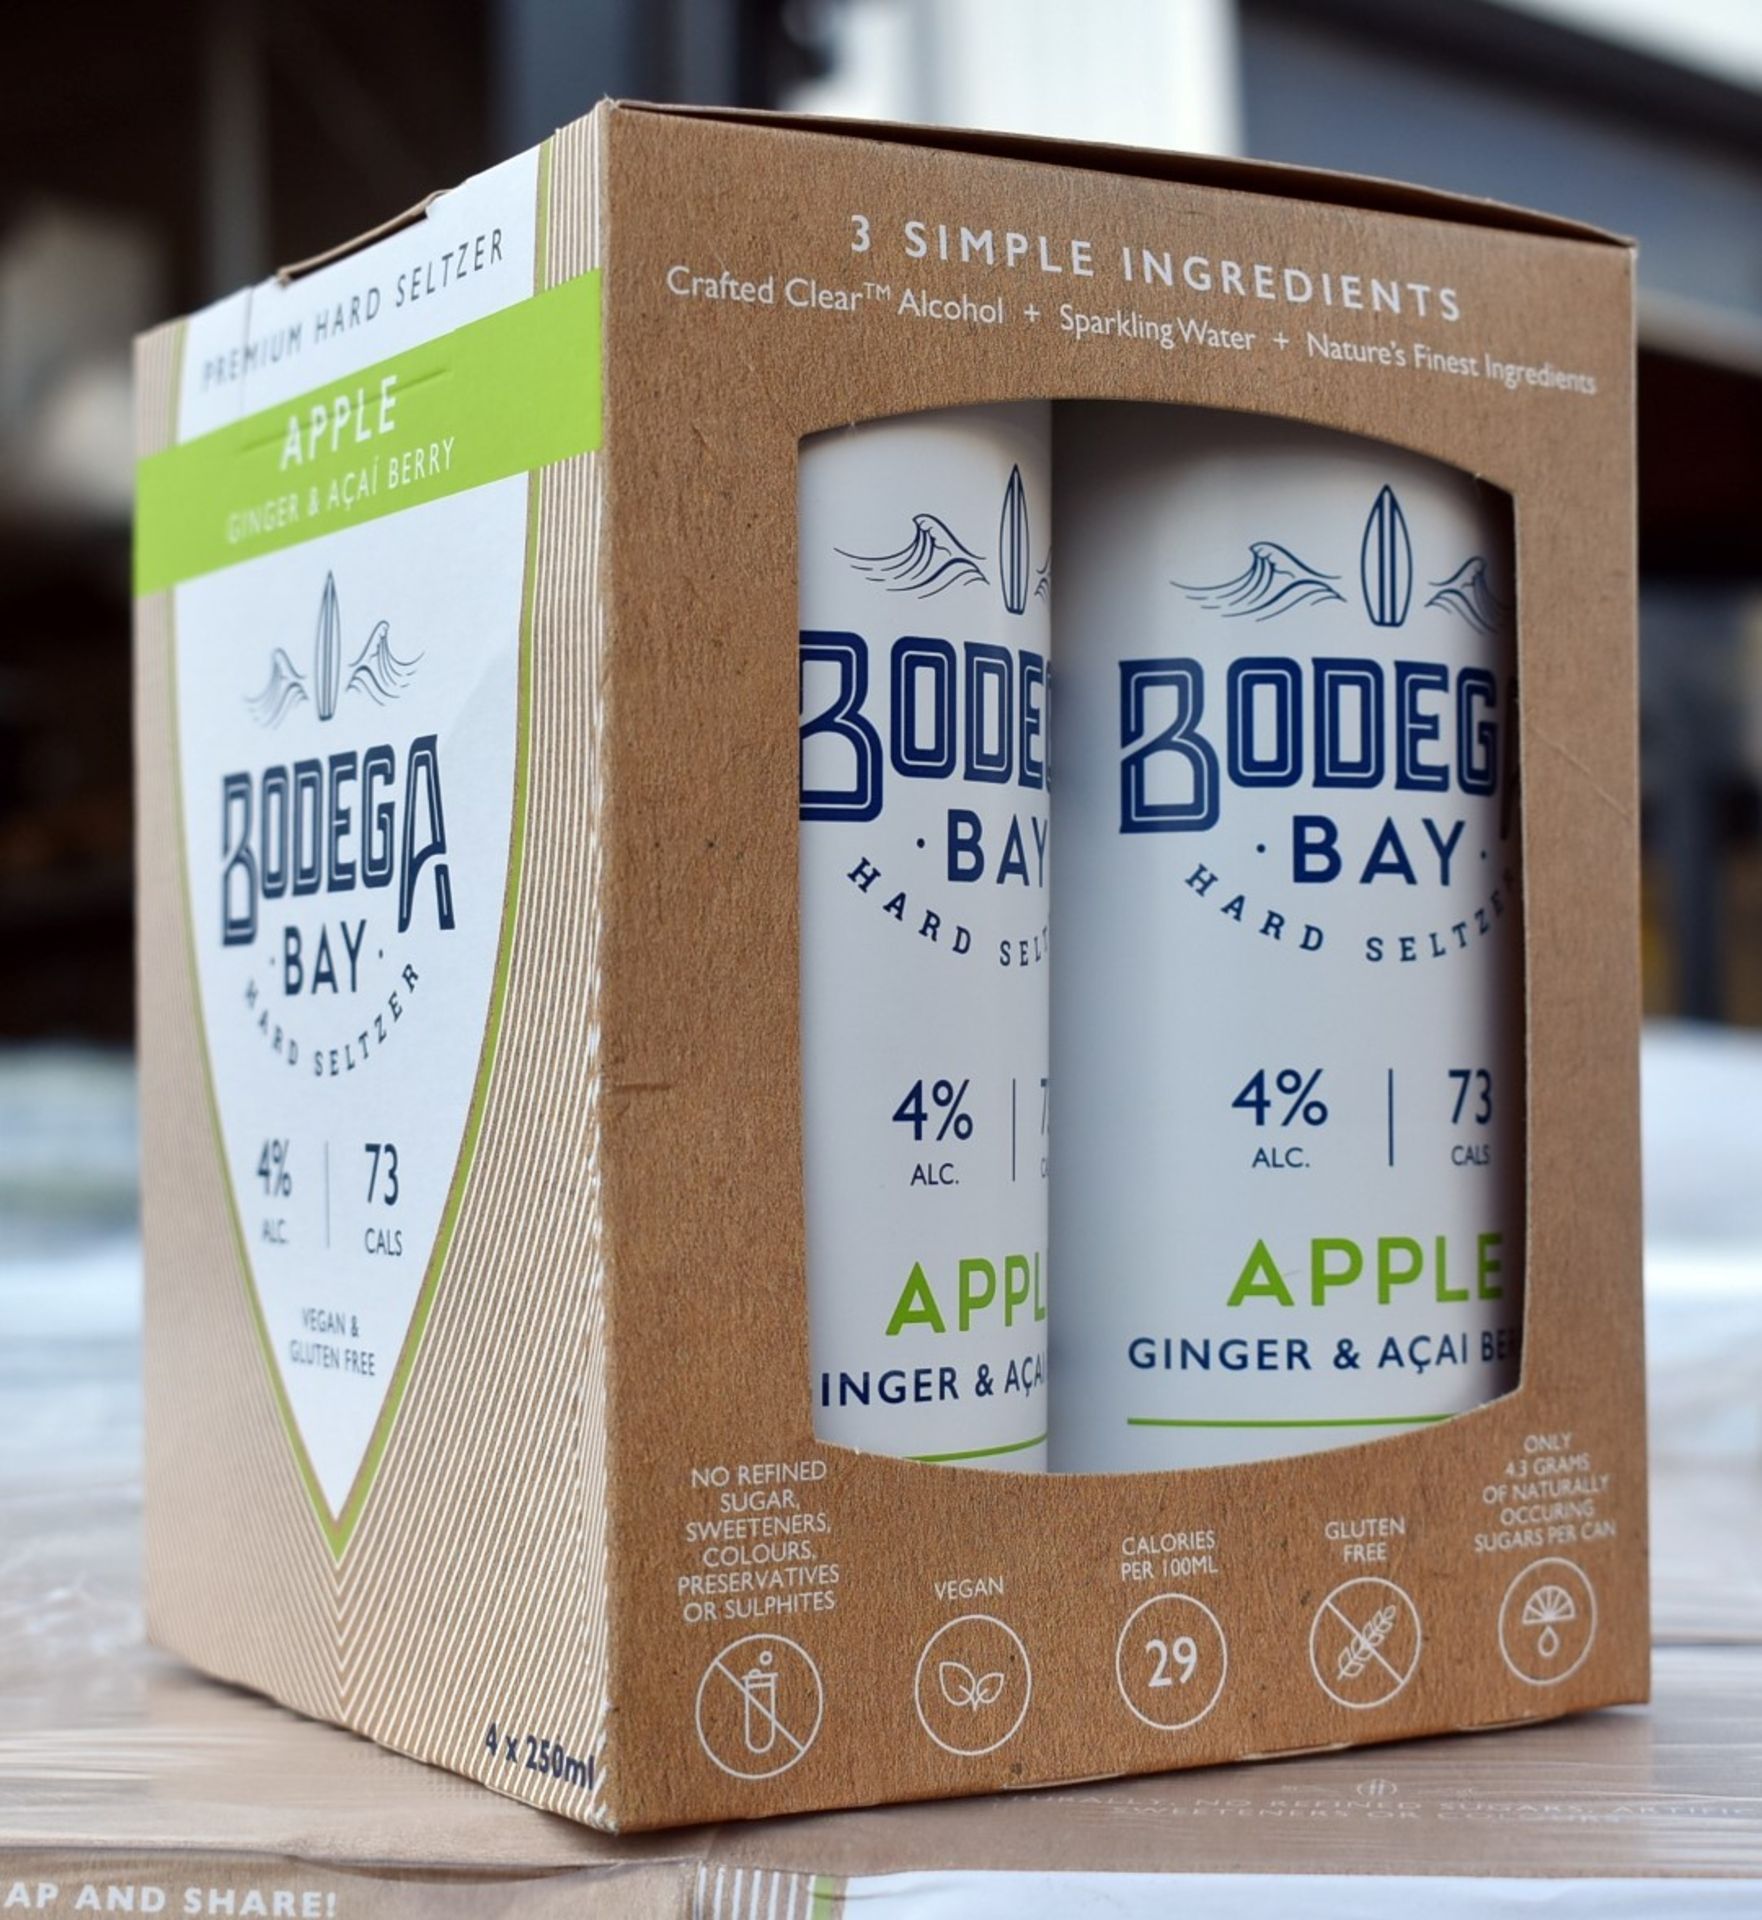 24 x Bodega Bay Hard Seltzer 250ml Alcoholic Sparkling Water Drinks - Apple Ginger & Acai Berry - 4% - Image 3 of 10